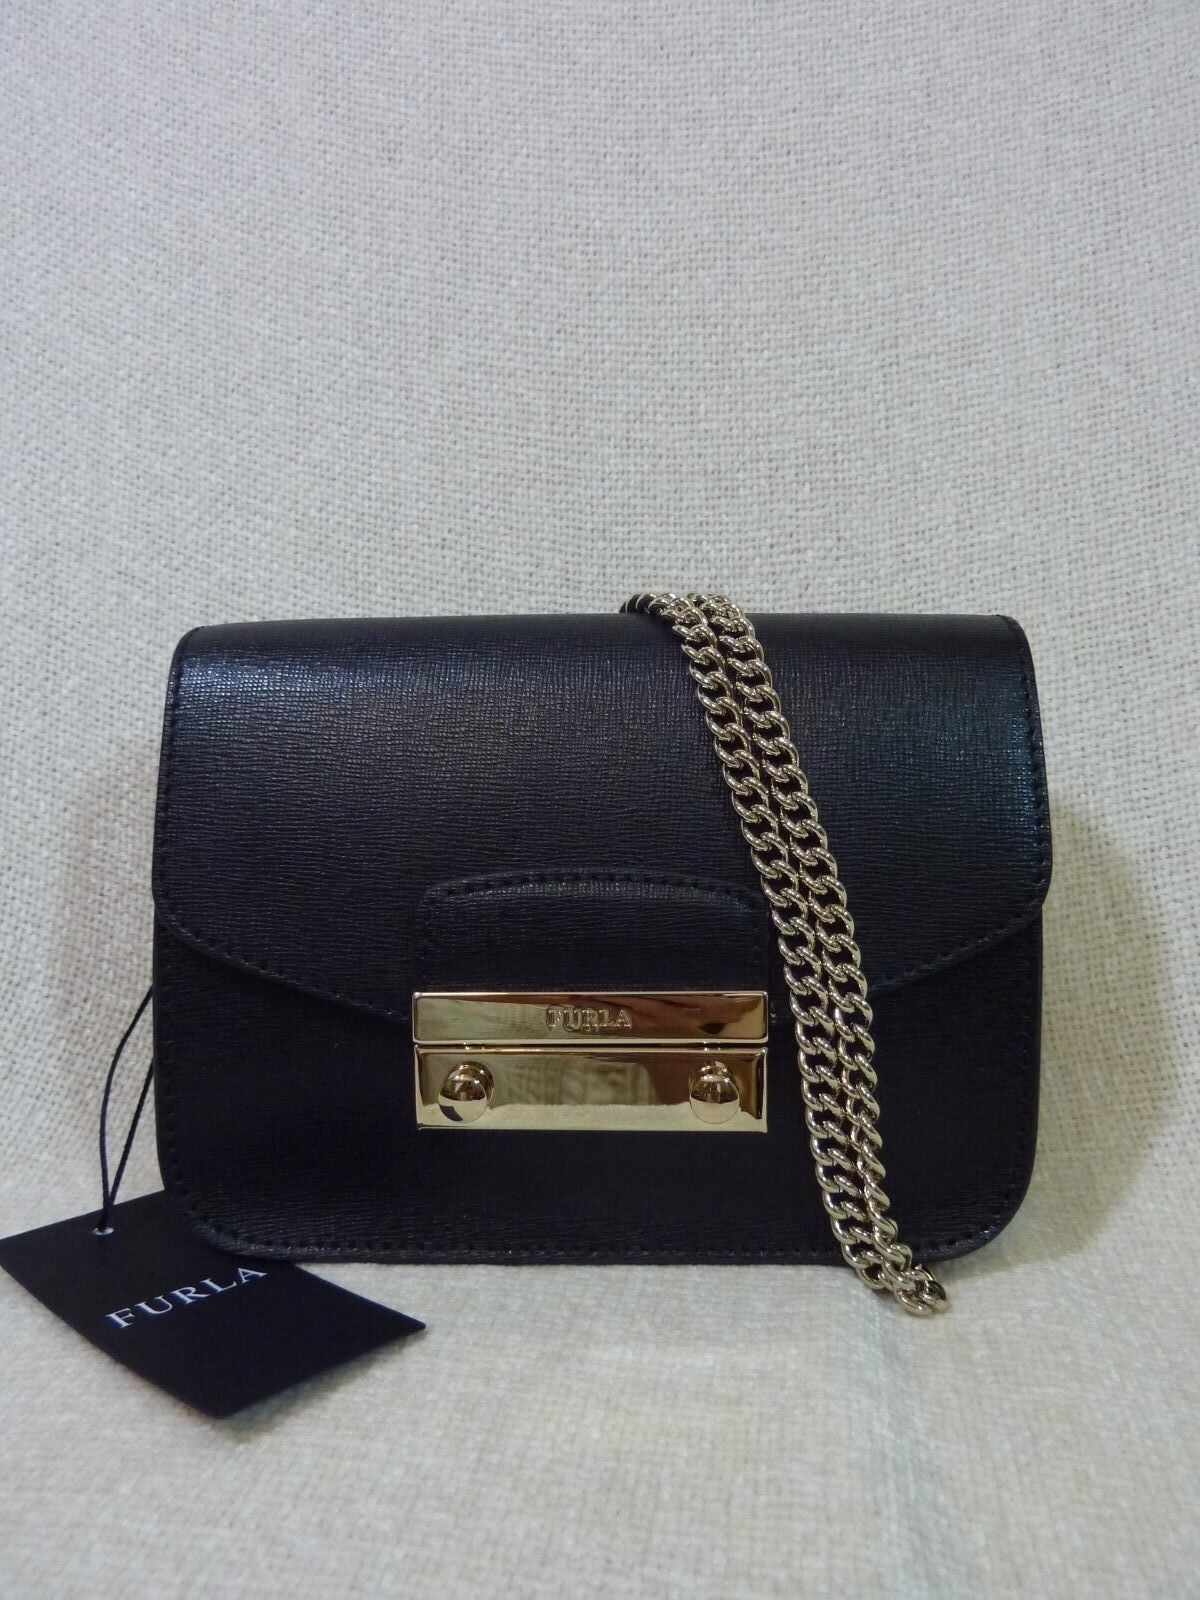 Primary image for NWT FURLA Onyx Black Saffiano Leather Mini Julia Chain Cross body Bag $328